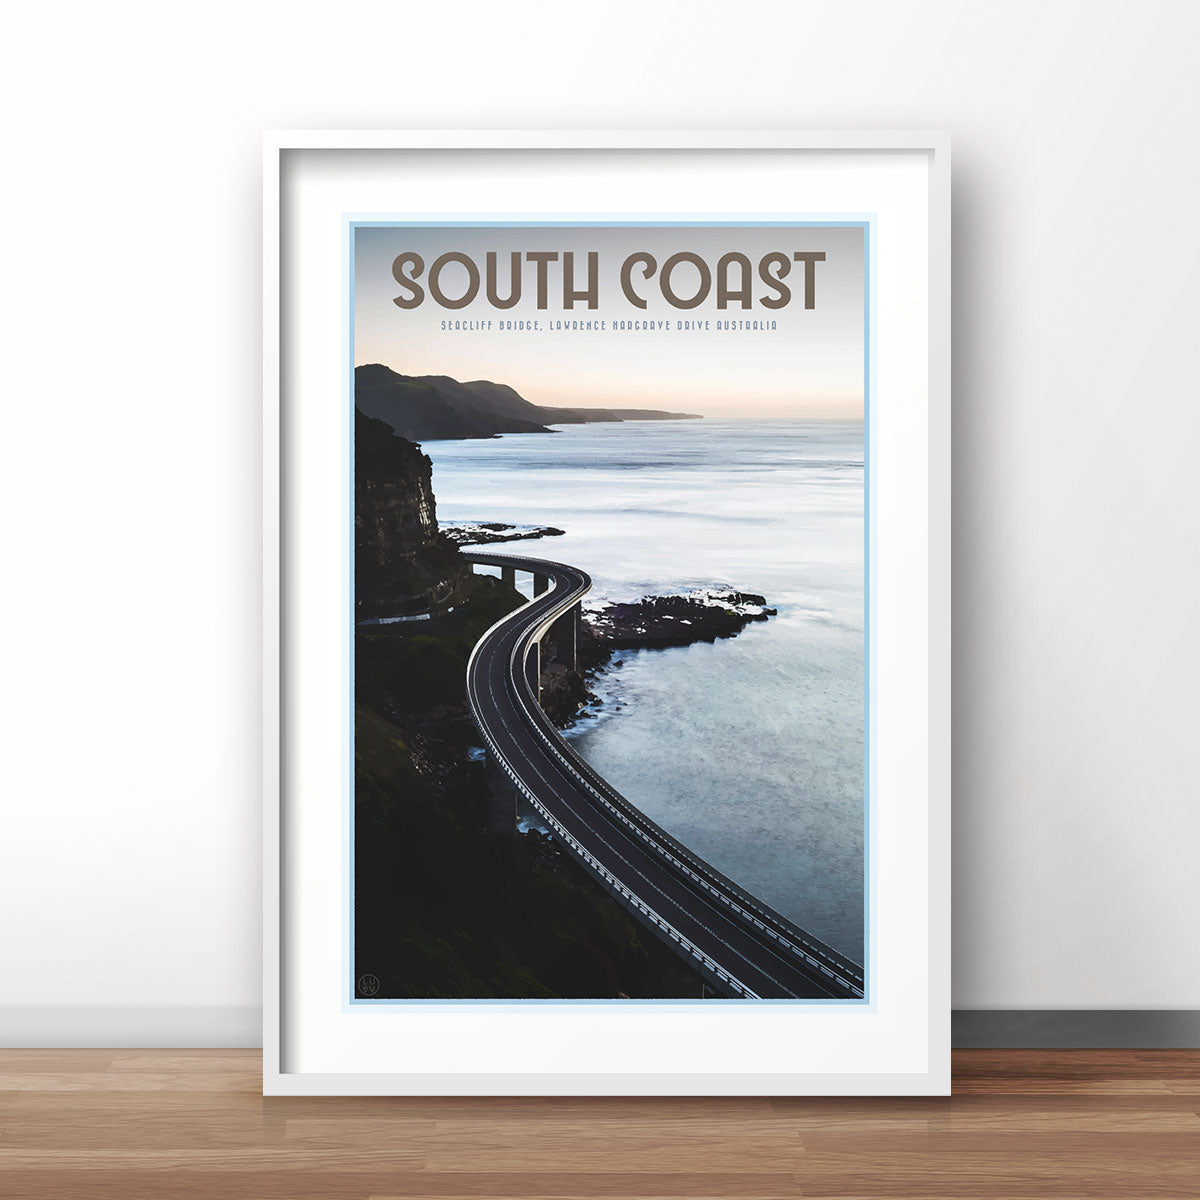 South coast seacliff bridge vintage travel style print by places we luv